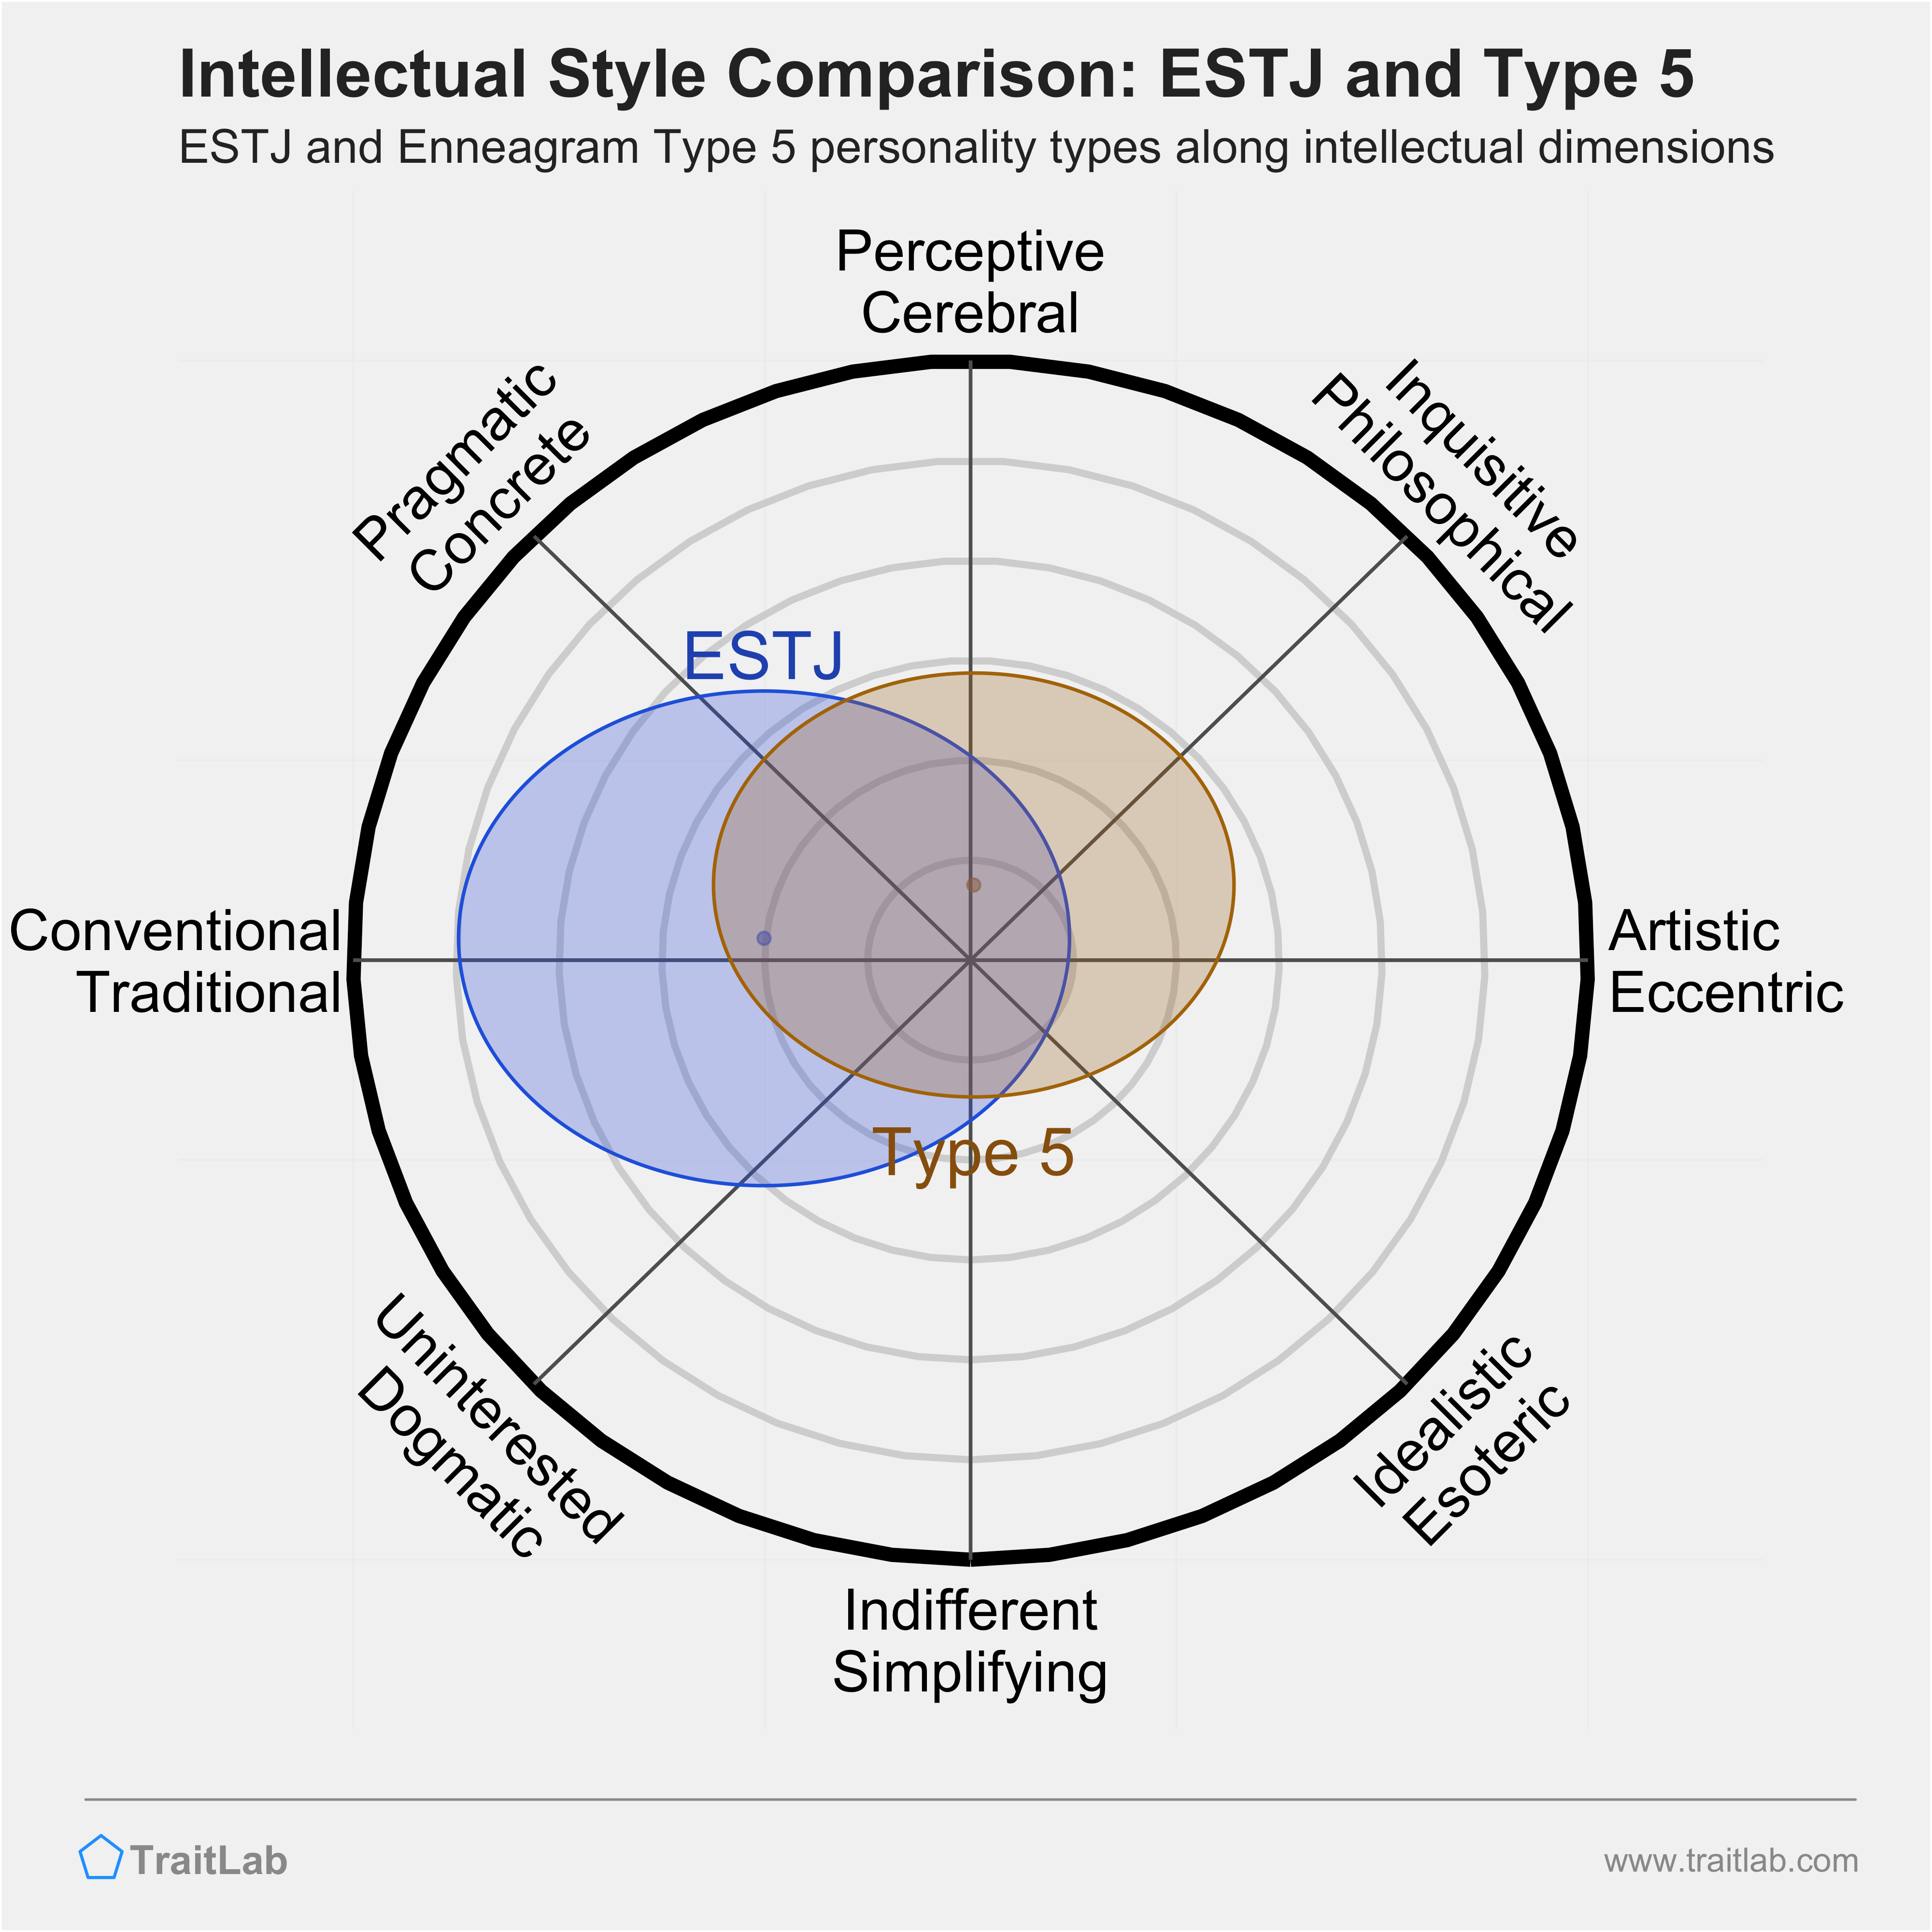 ESTJ and Type 5 comparison across intellectual dimensions